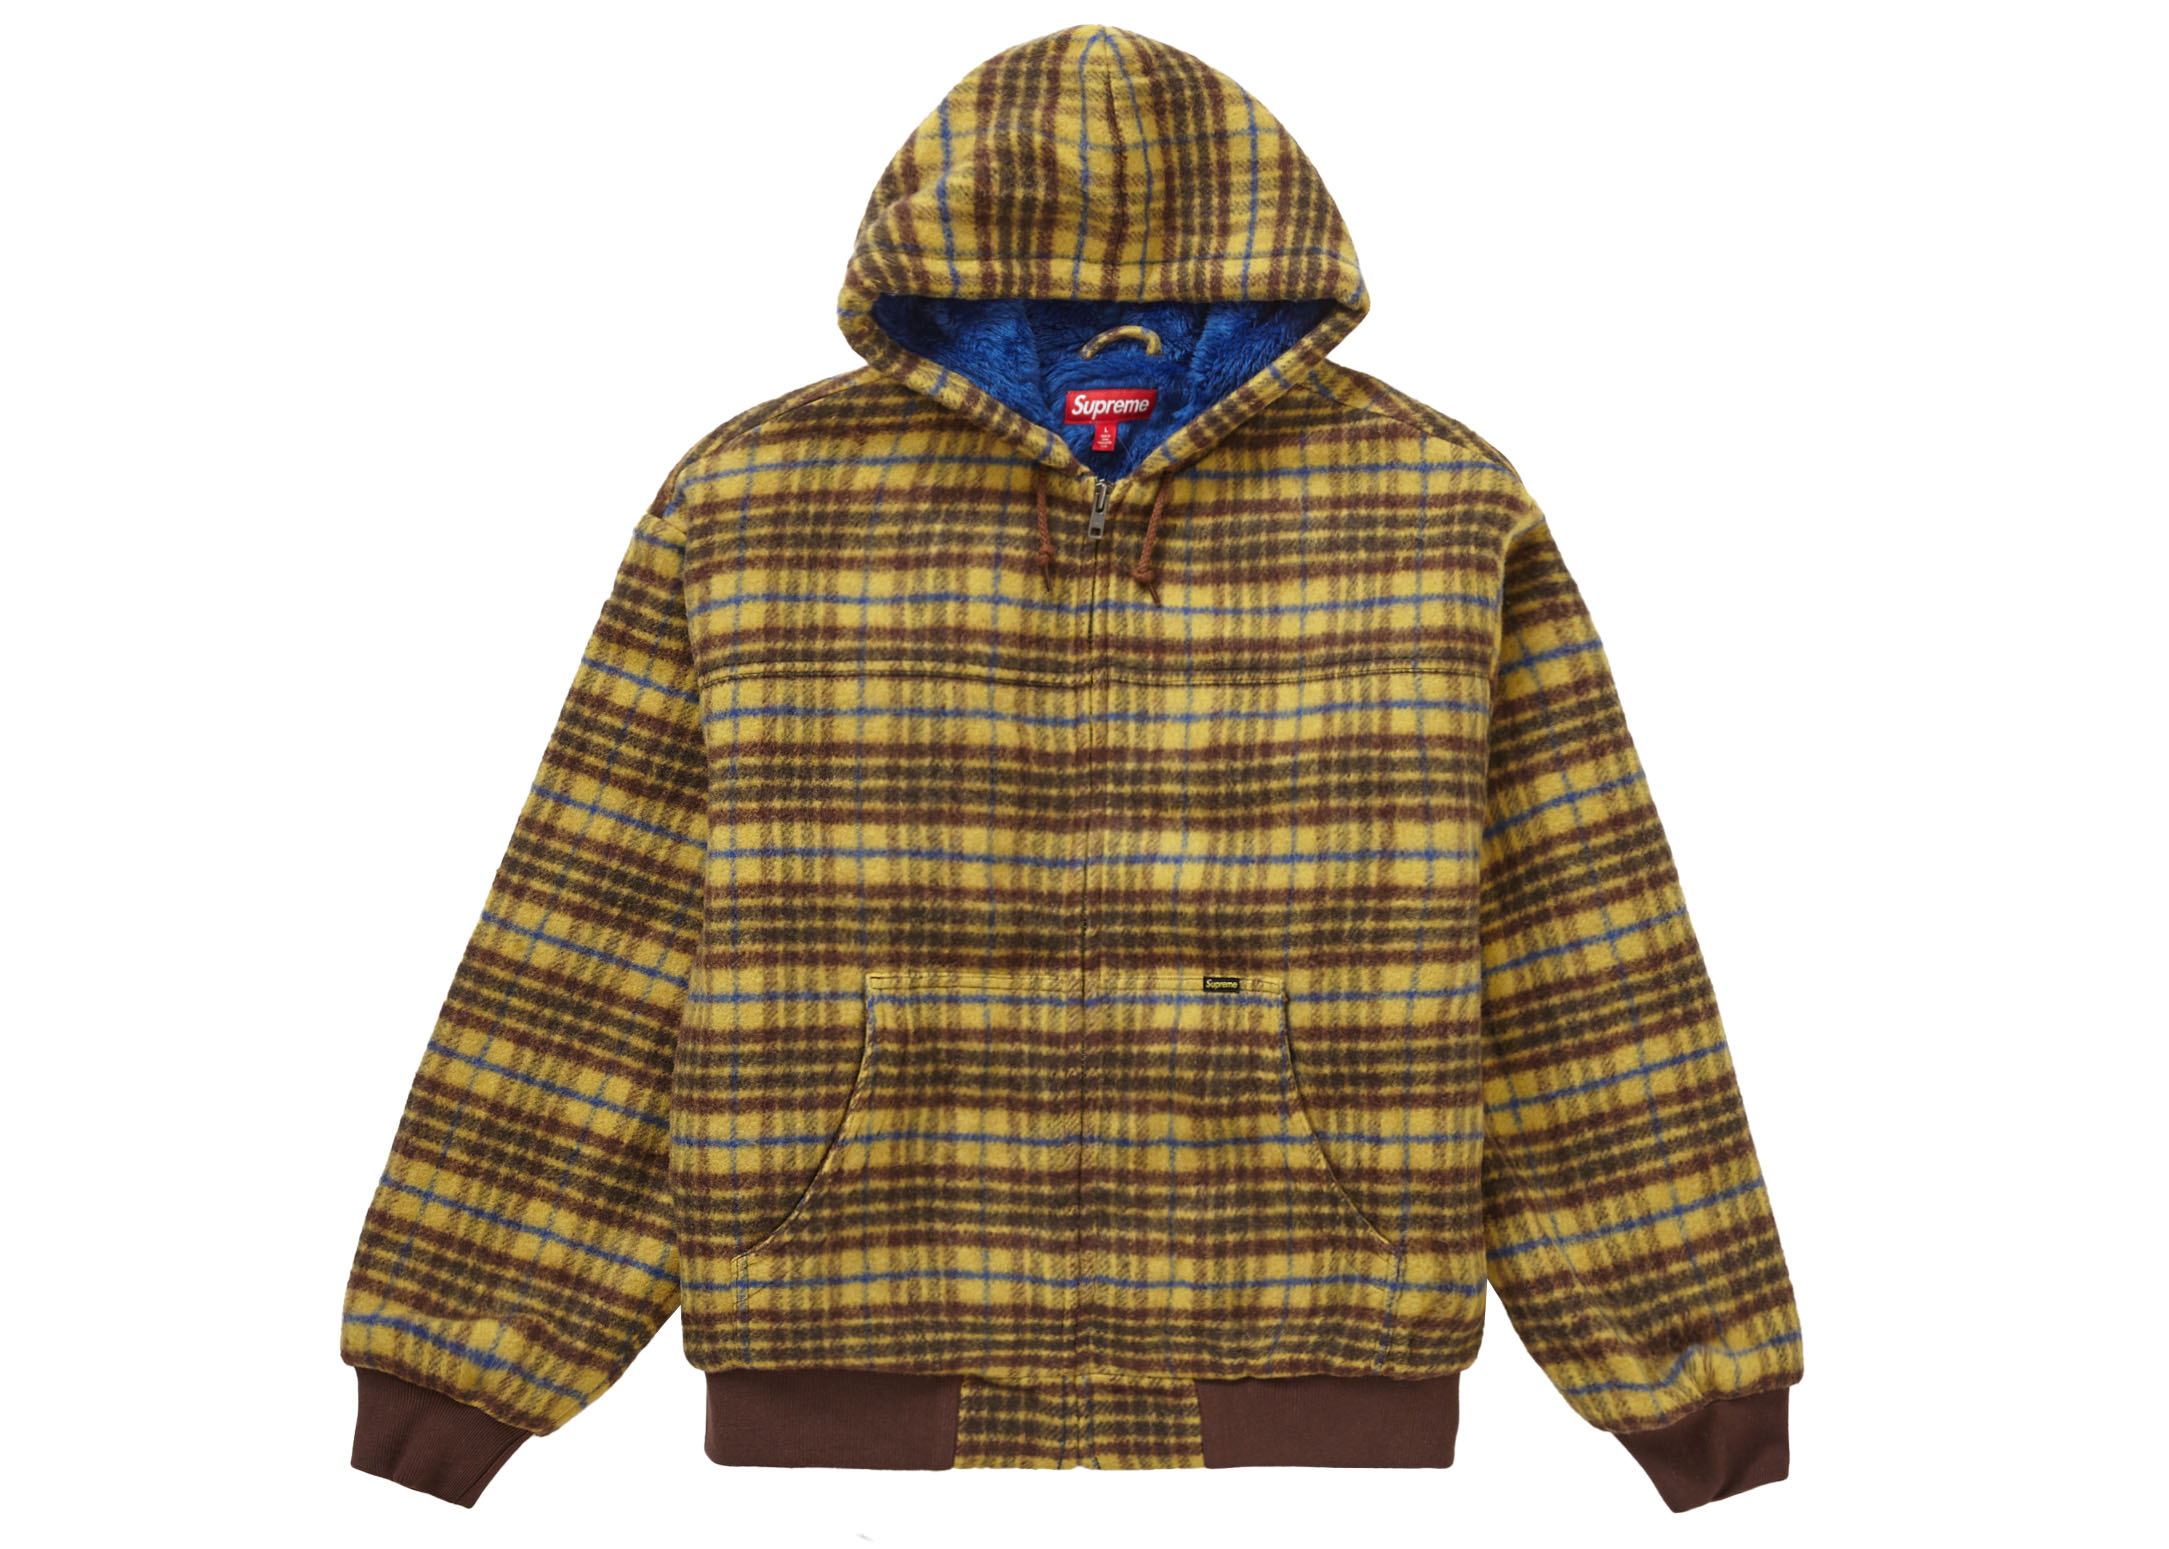 Plaid Wool Hooded Work Jacket170センチで大きかったですか